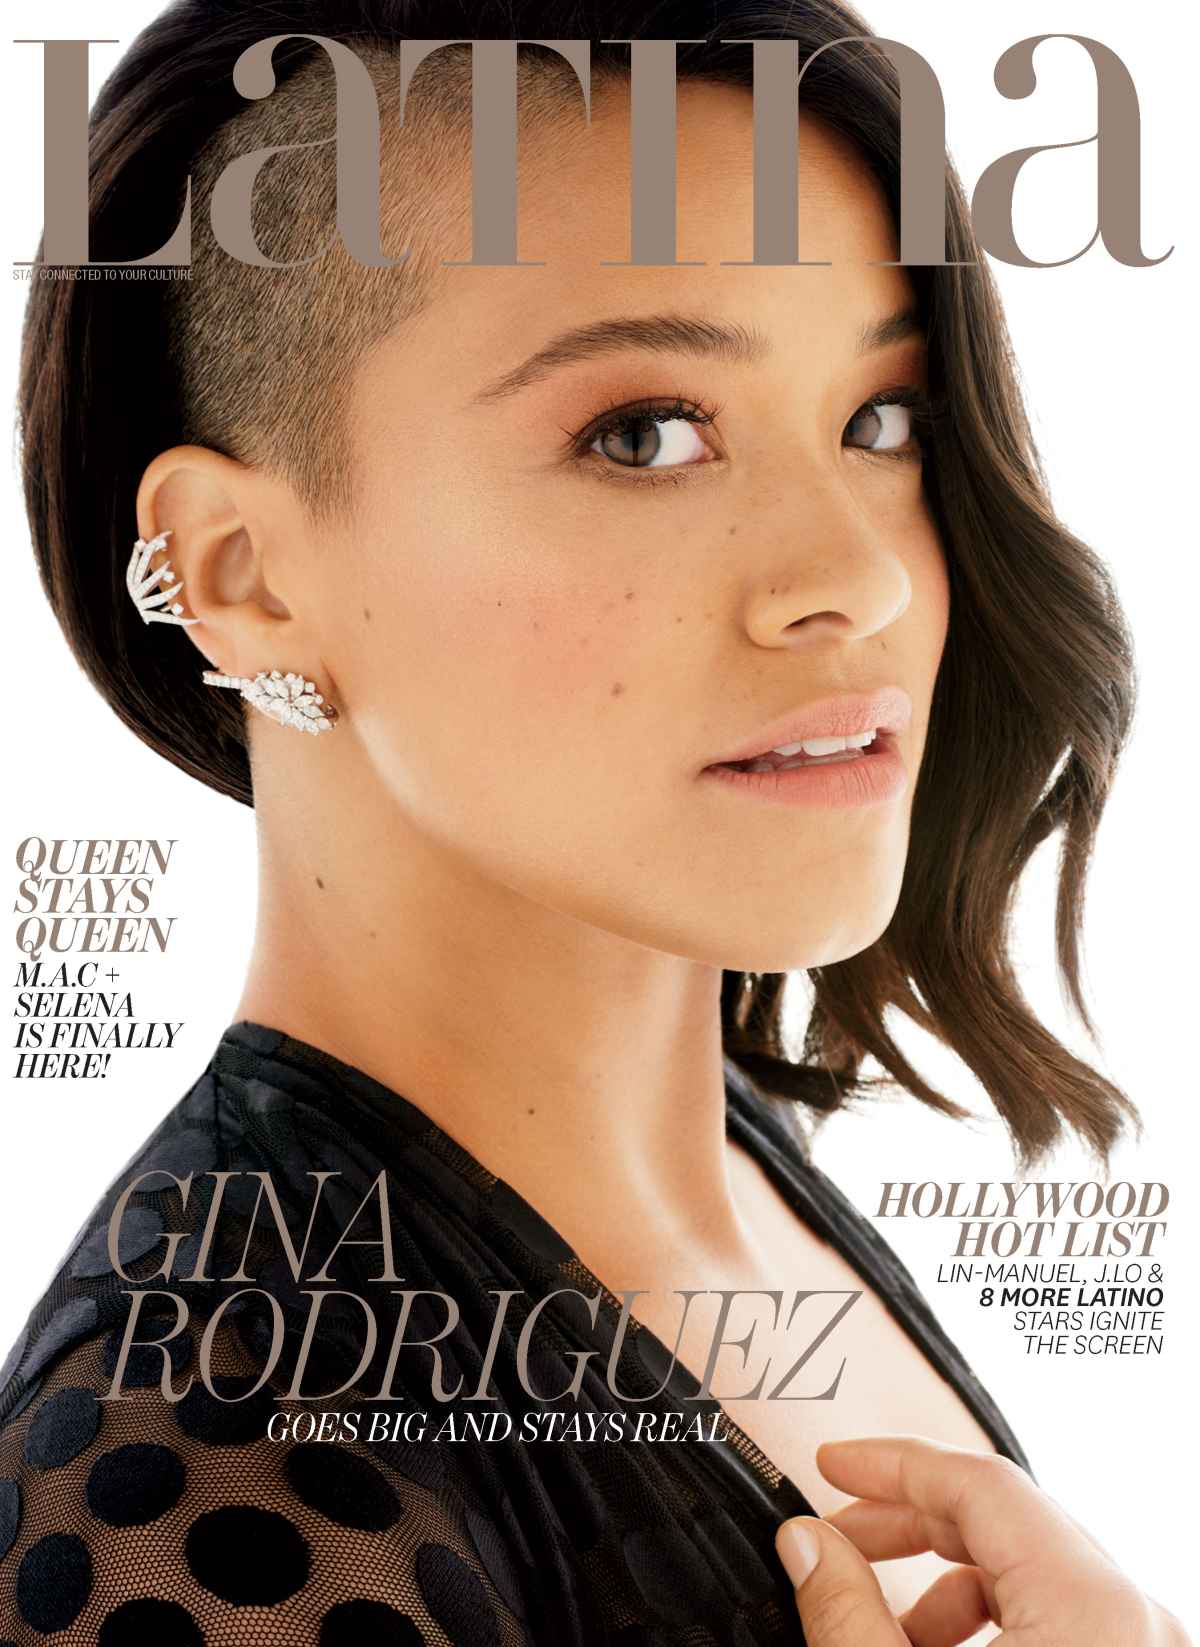 Gina Rodriguez Defends Her Half-Shaved Head